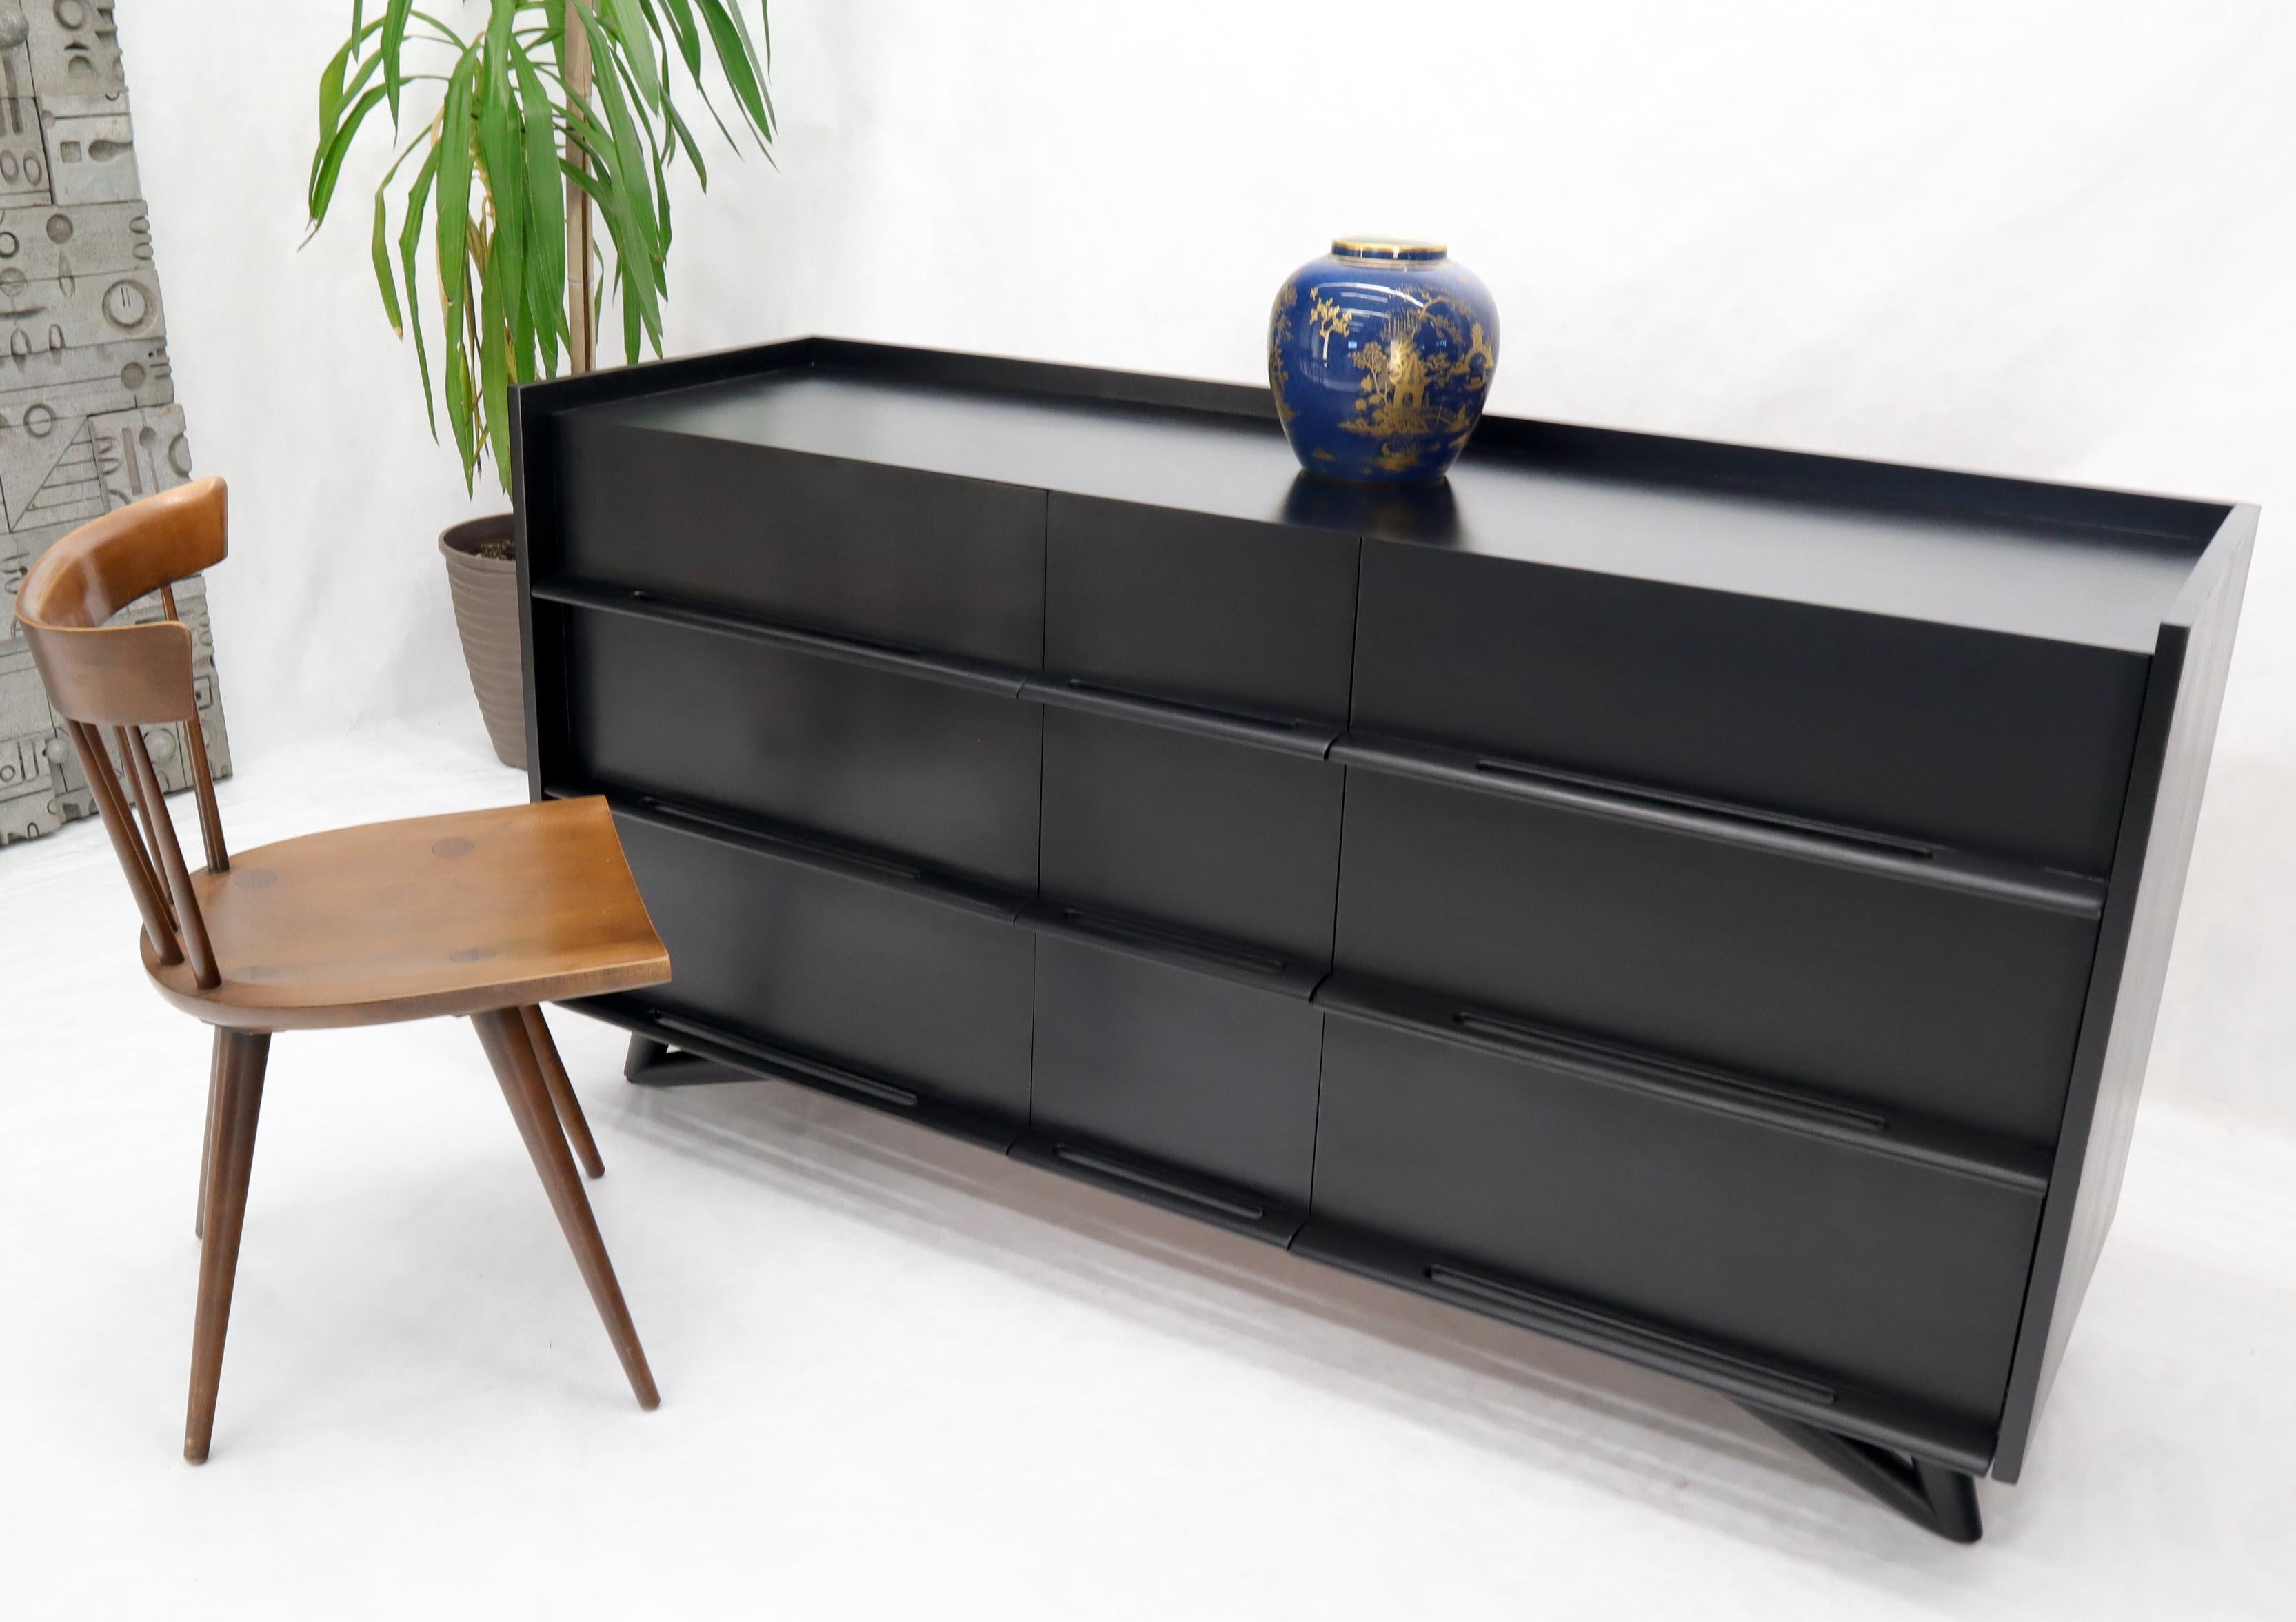 Birch Black Lacquer Gallery Top Pieced Sculptural Wood Pulls Handles Dresser Credenza